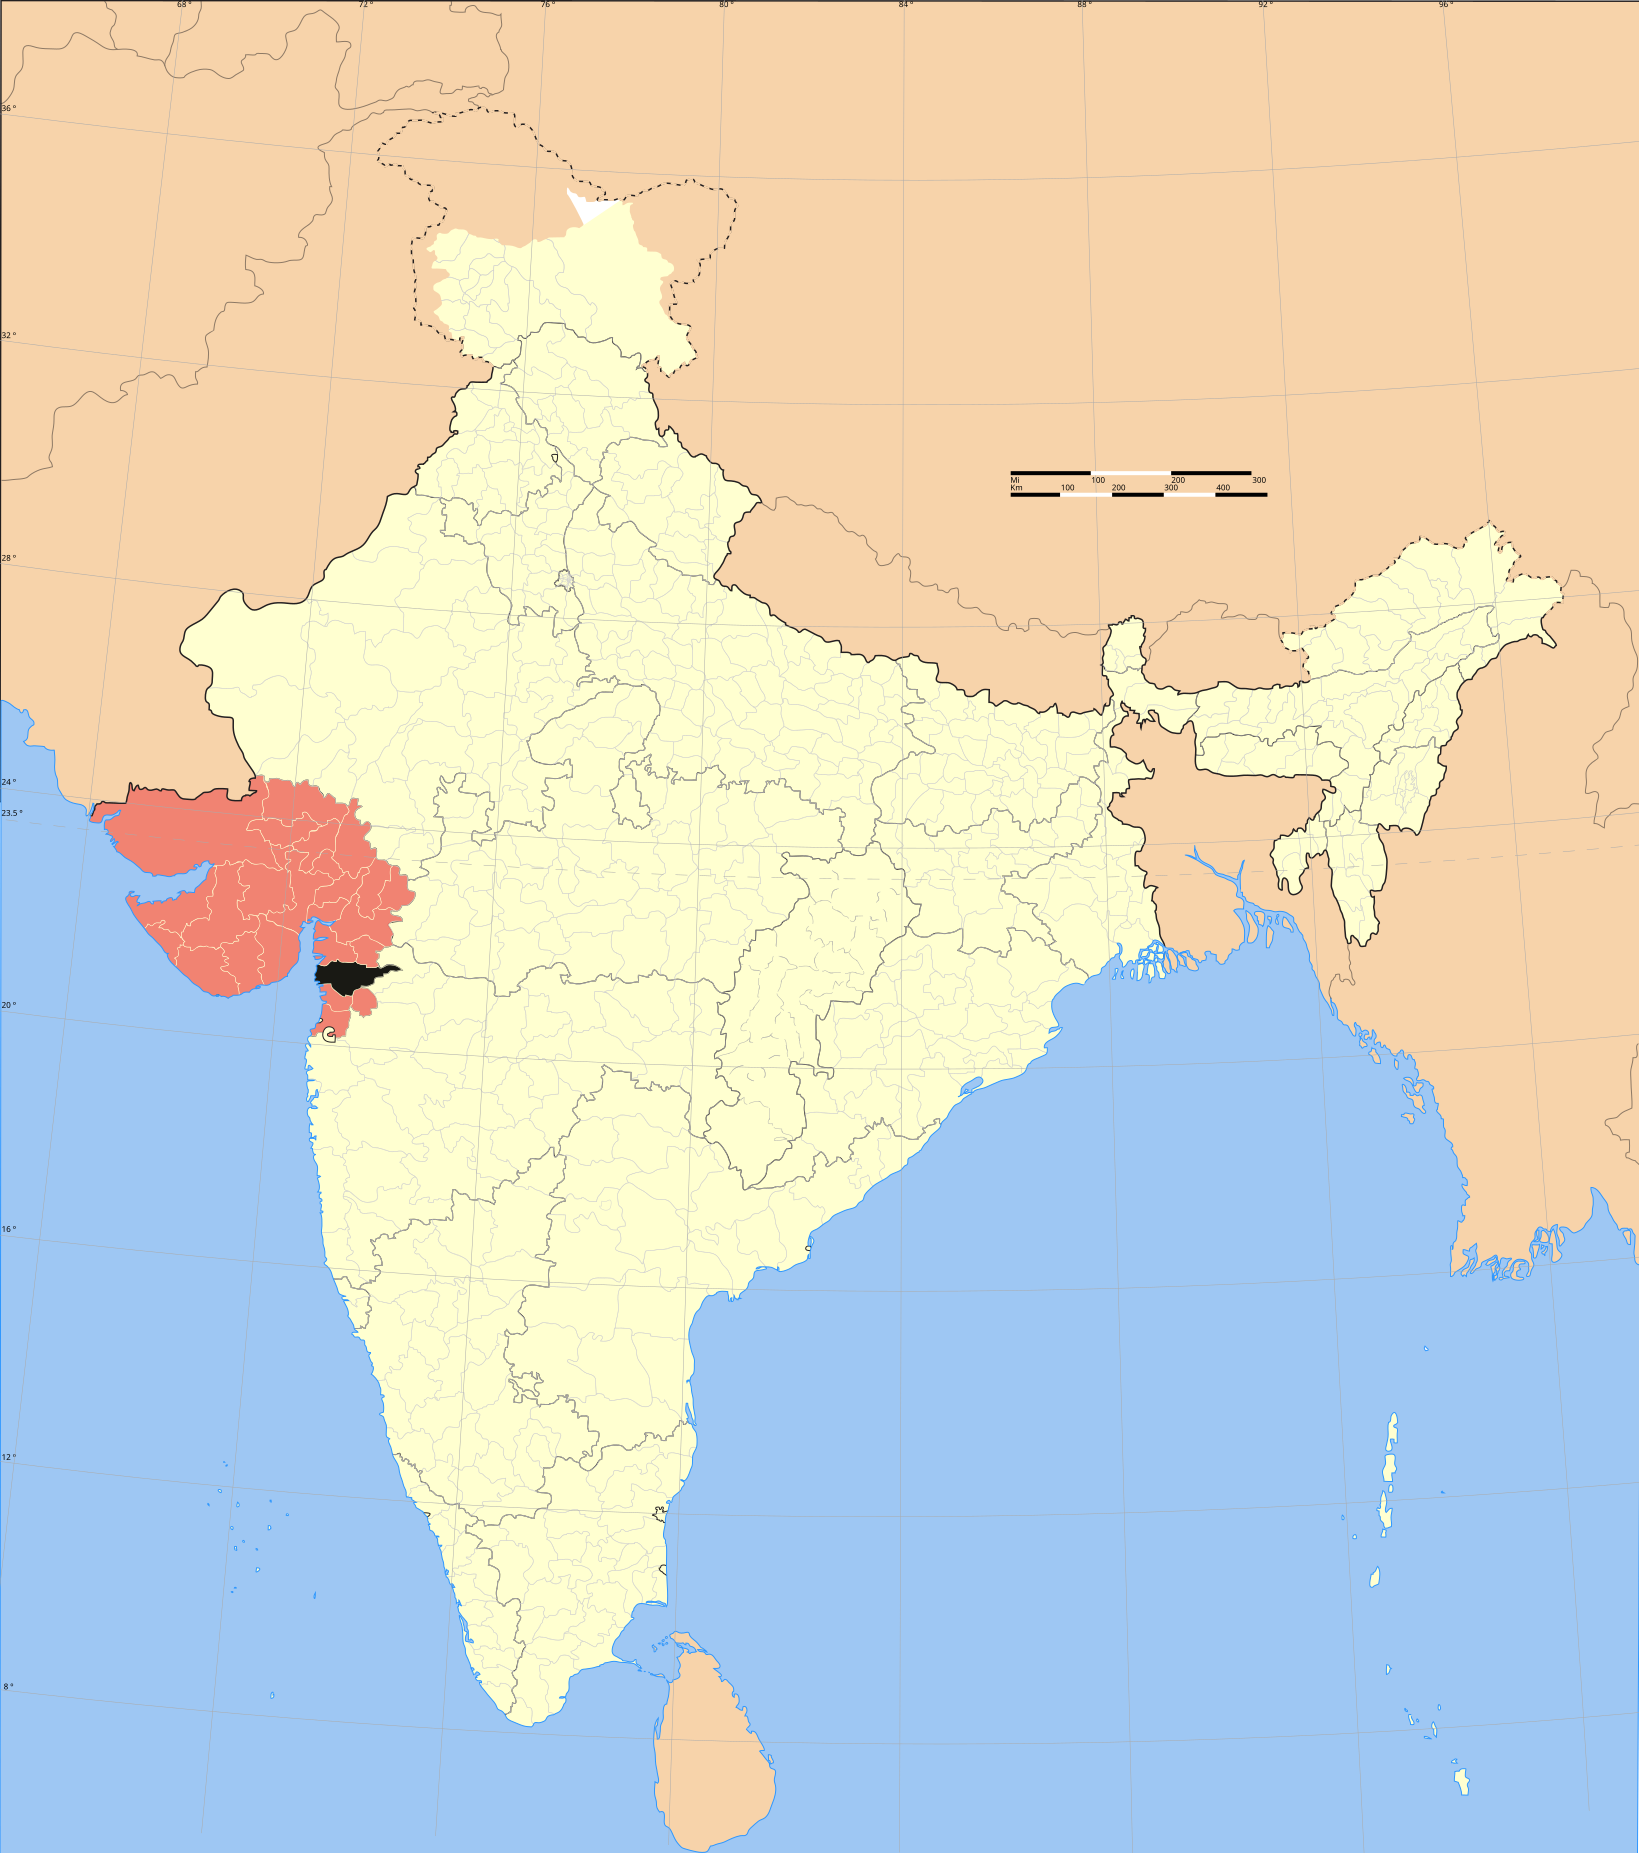 Surat Location On Map File:gujarat District Location Map Surat.svg - Wikimedia Commons